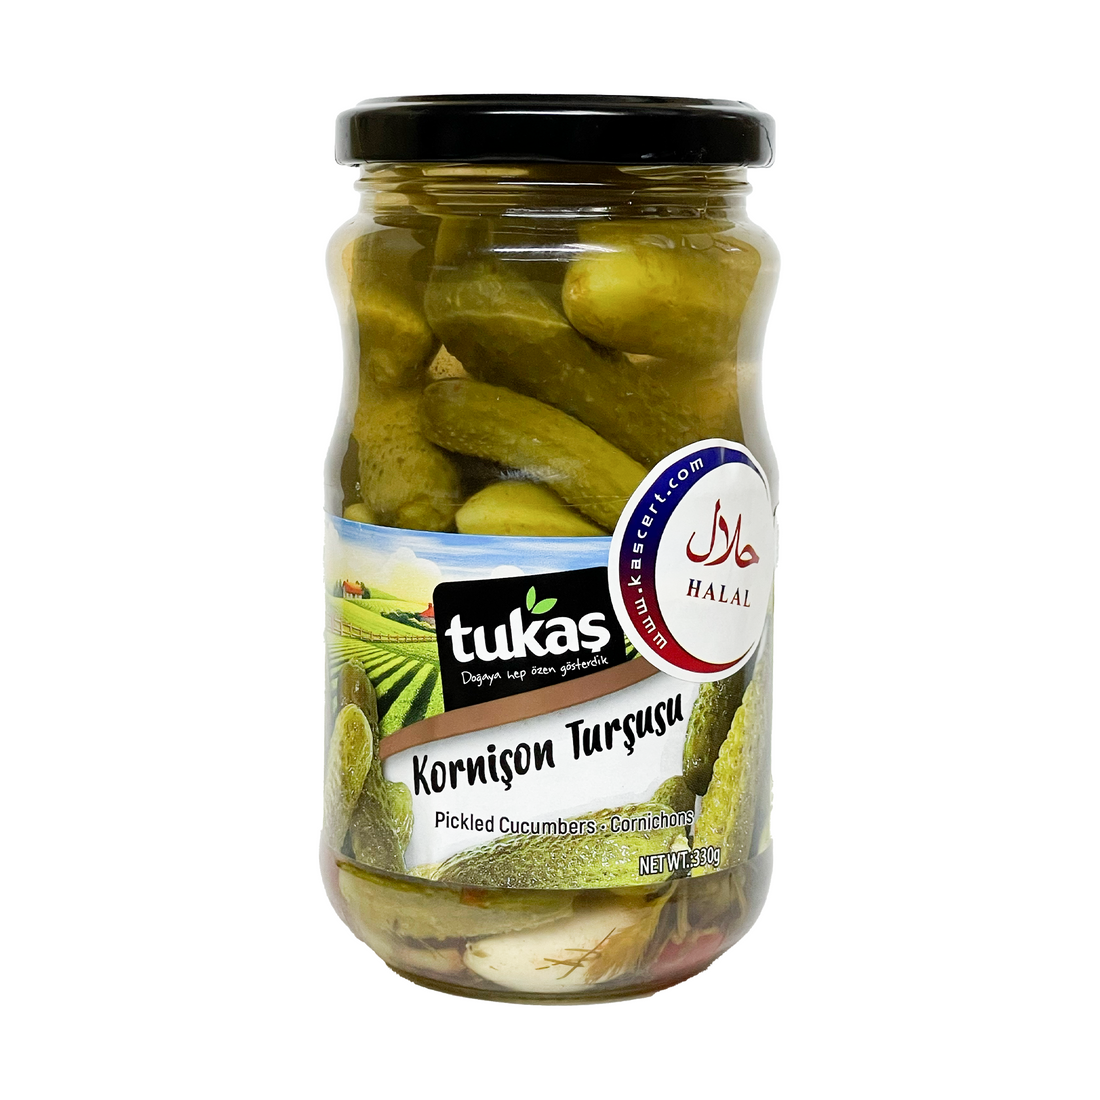 Tukas Pickled Cucumbers 330g | Tukas Kornison Tursusu 